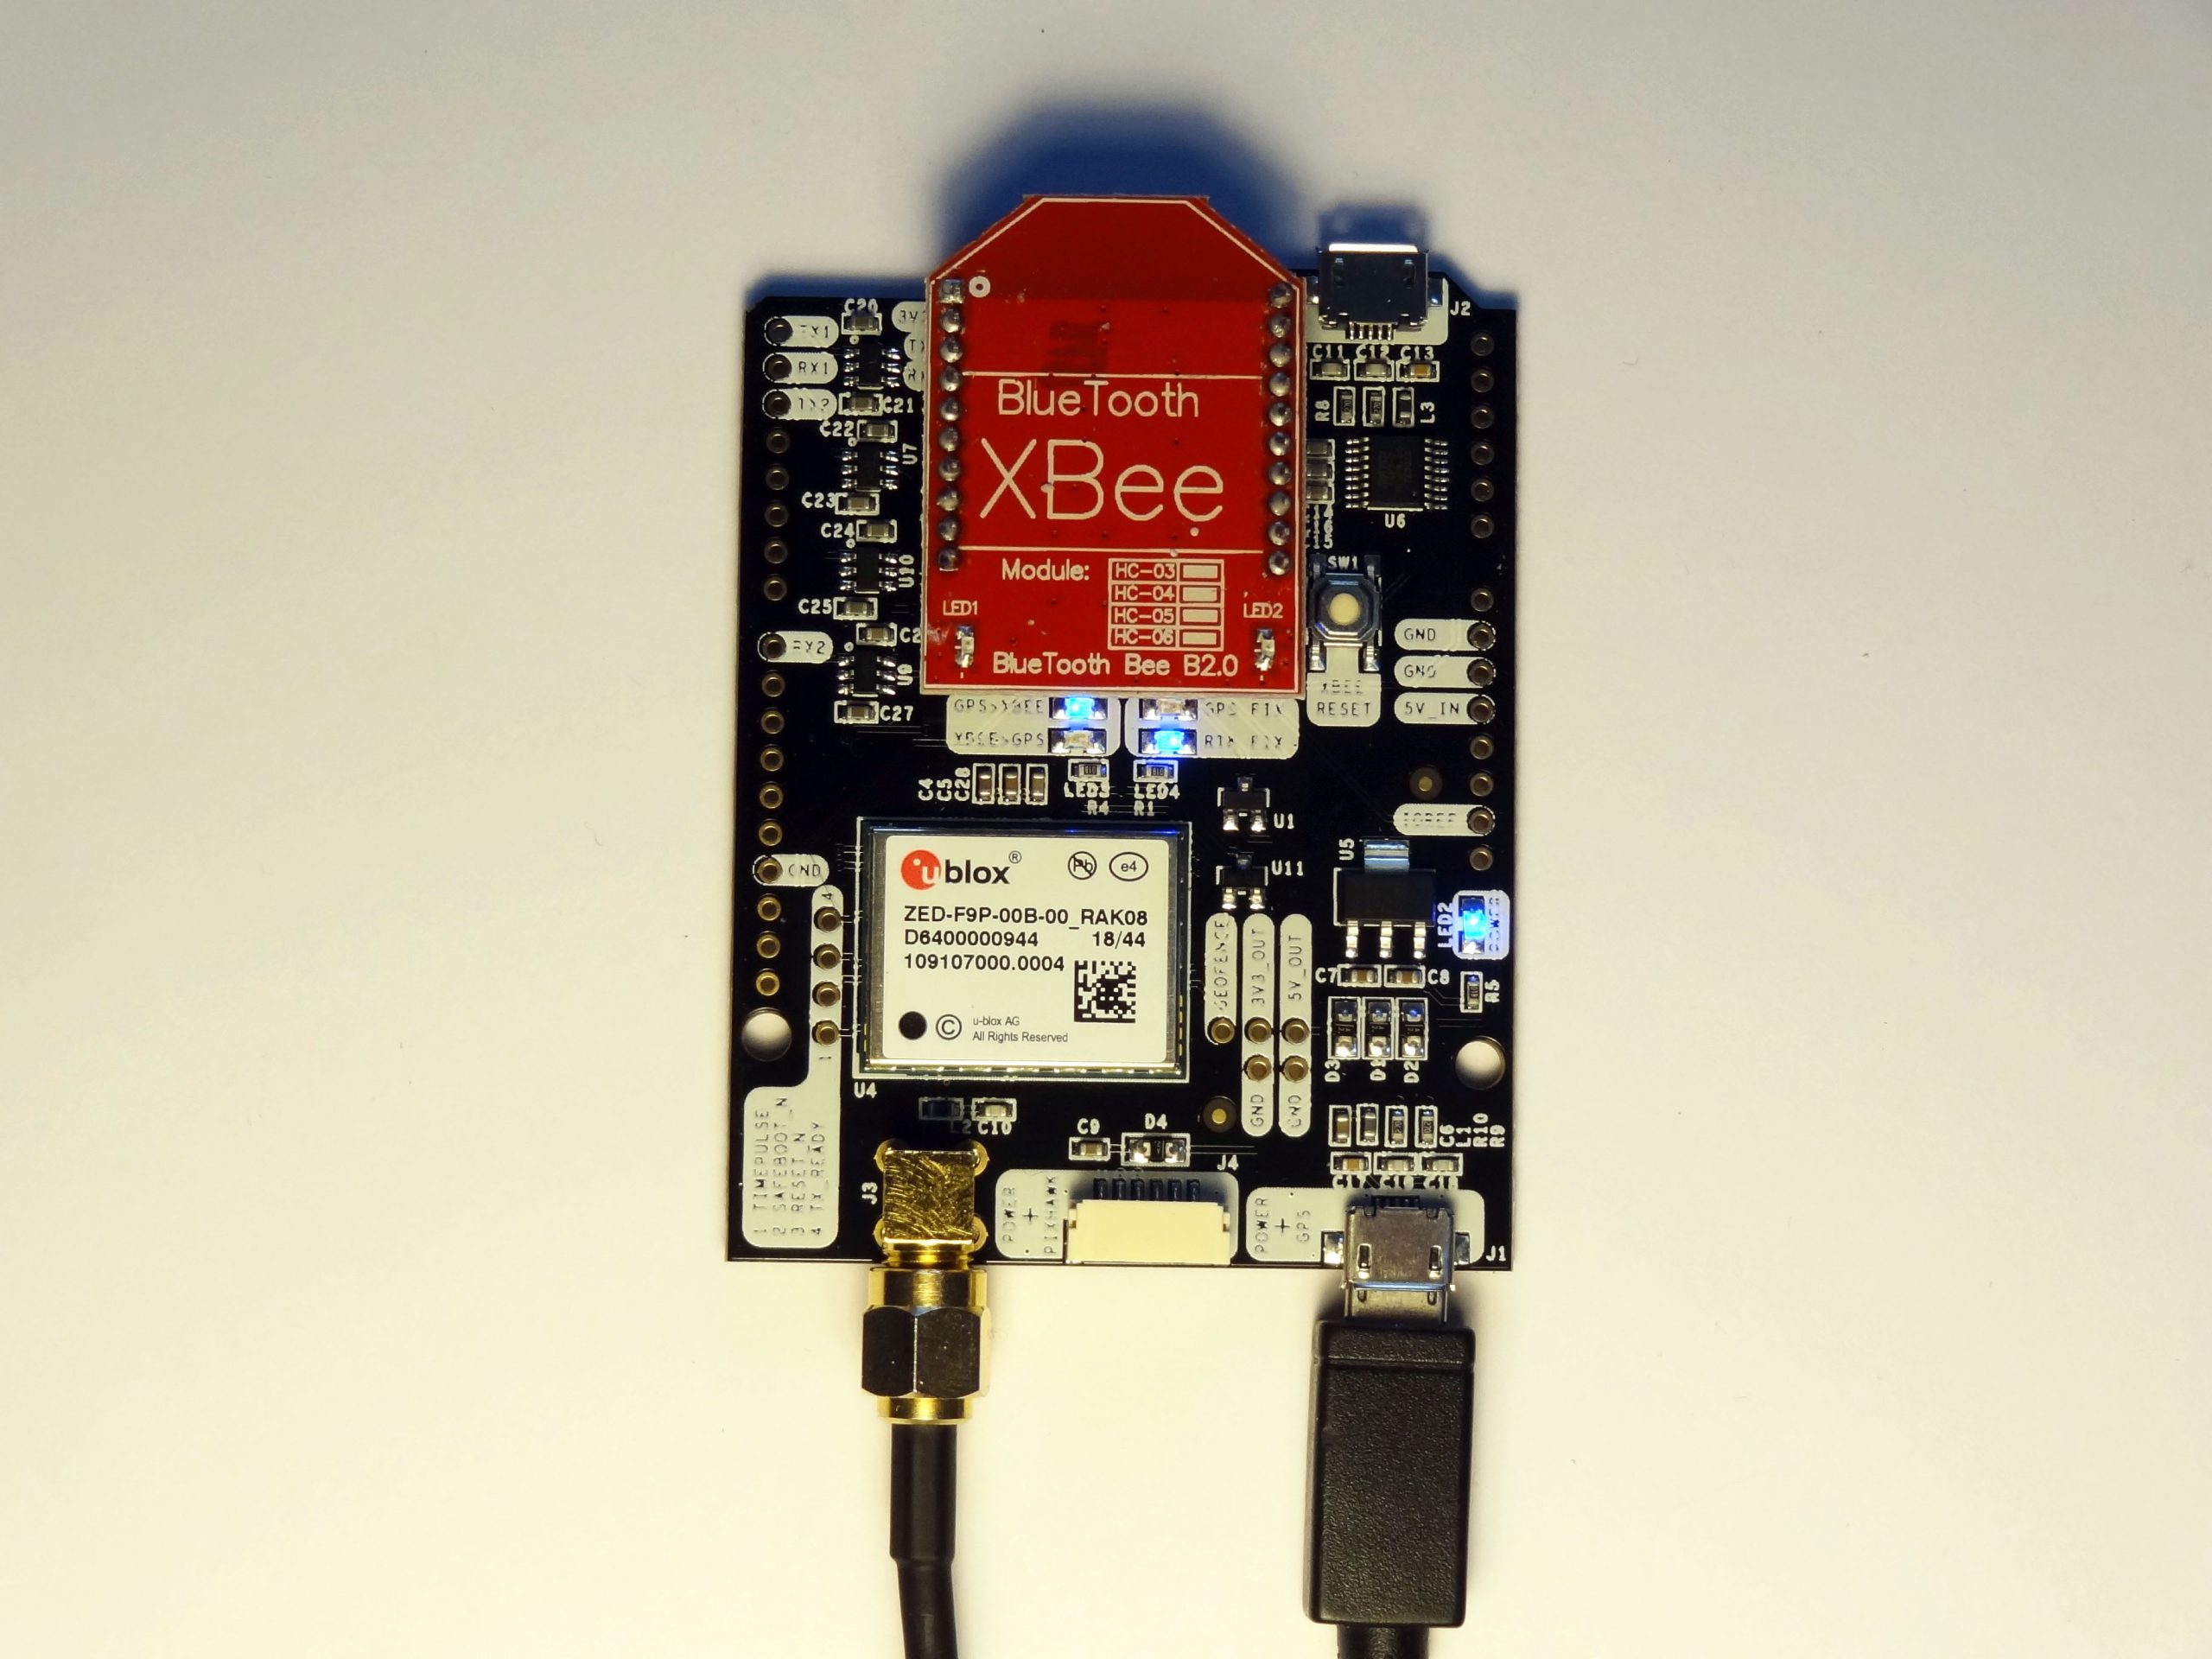 simpleRTK2B Bluetooth mounted